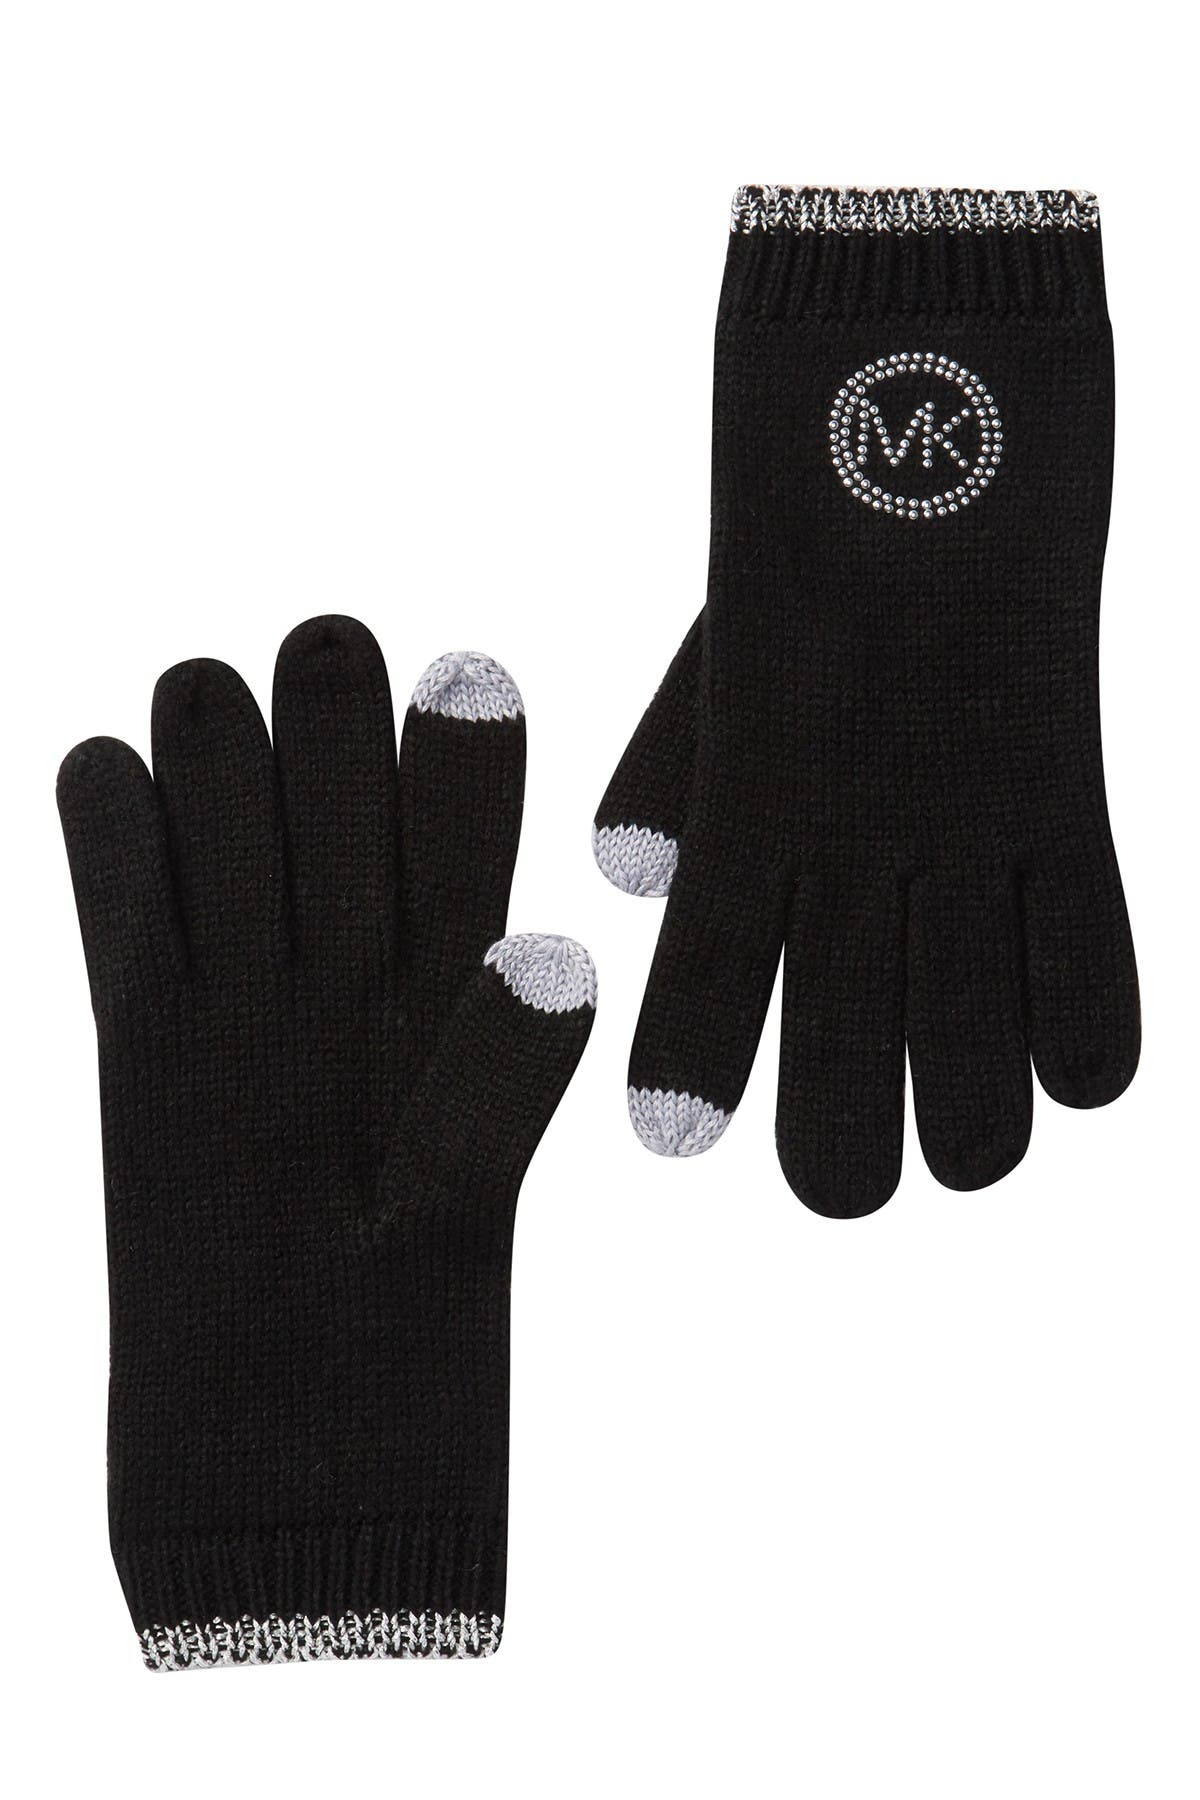 mk gloves nordstrom rack